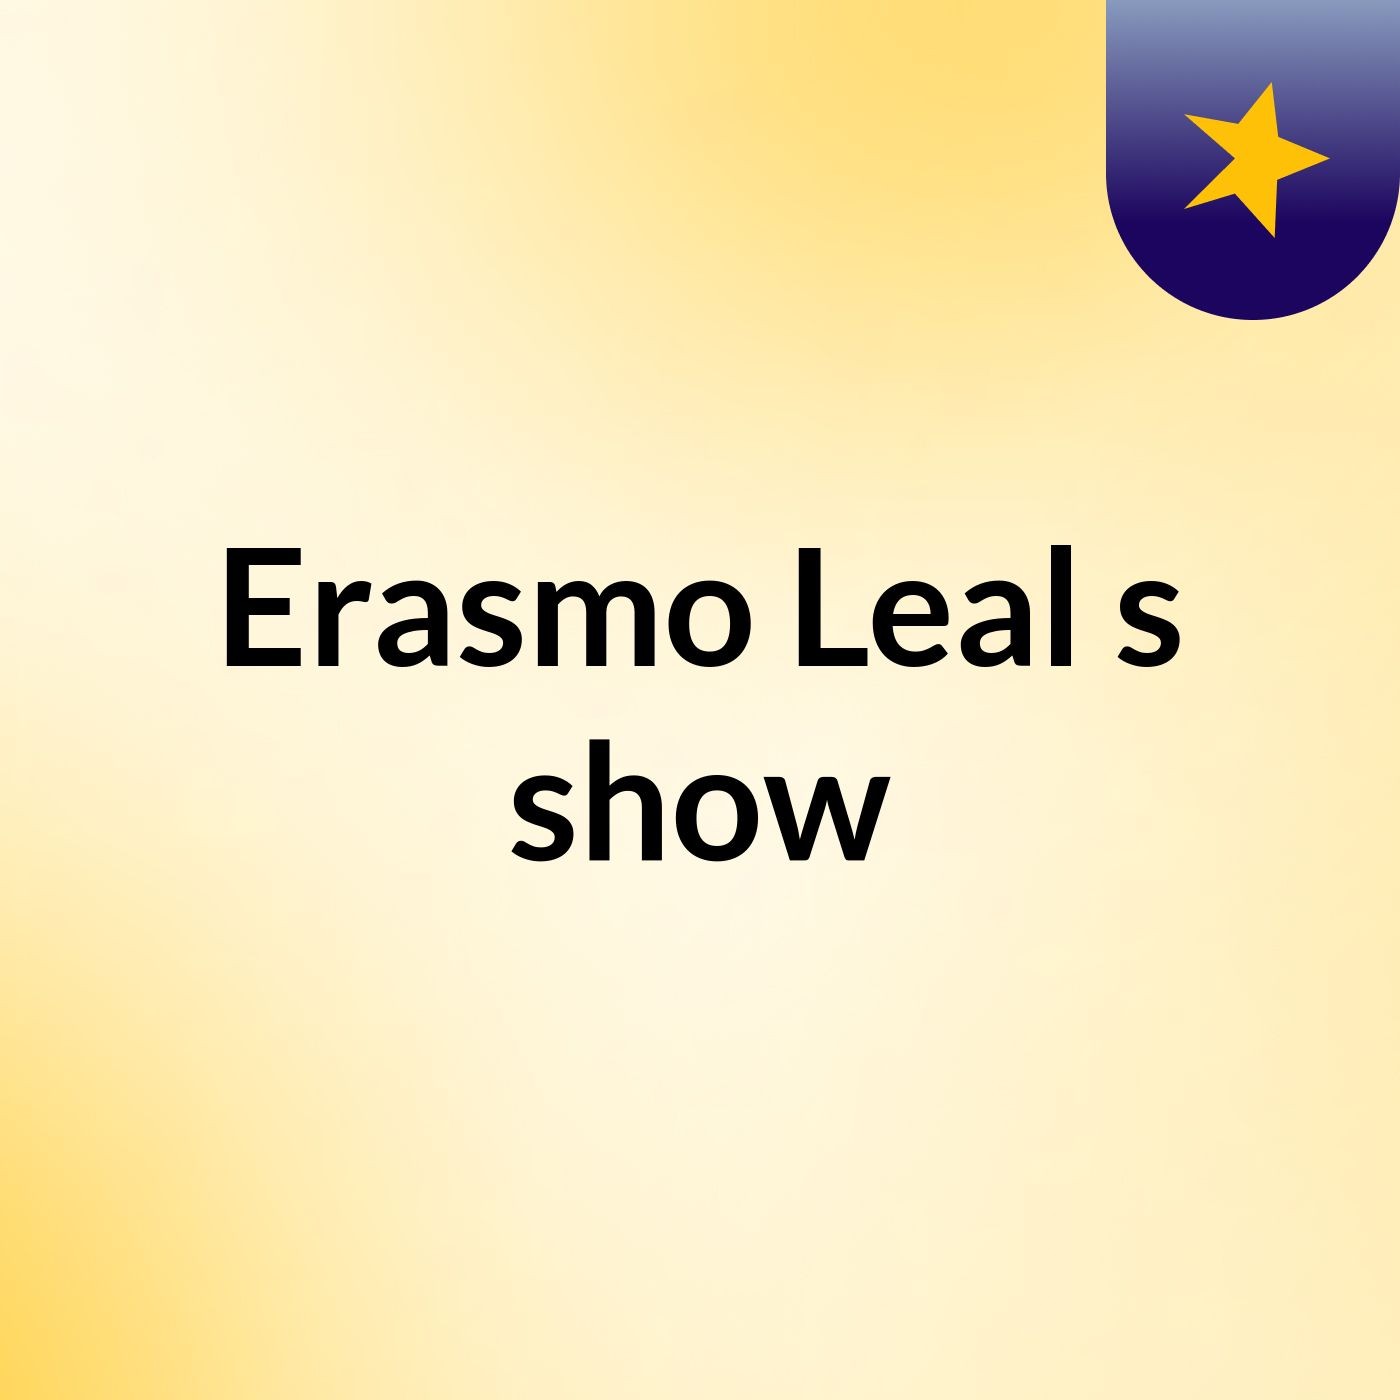 Erasmo Leal's show